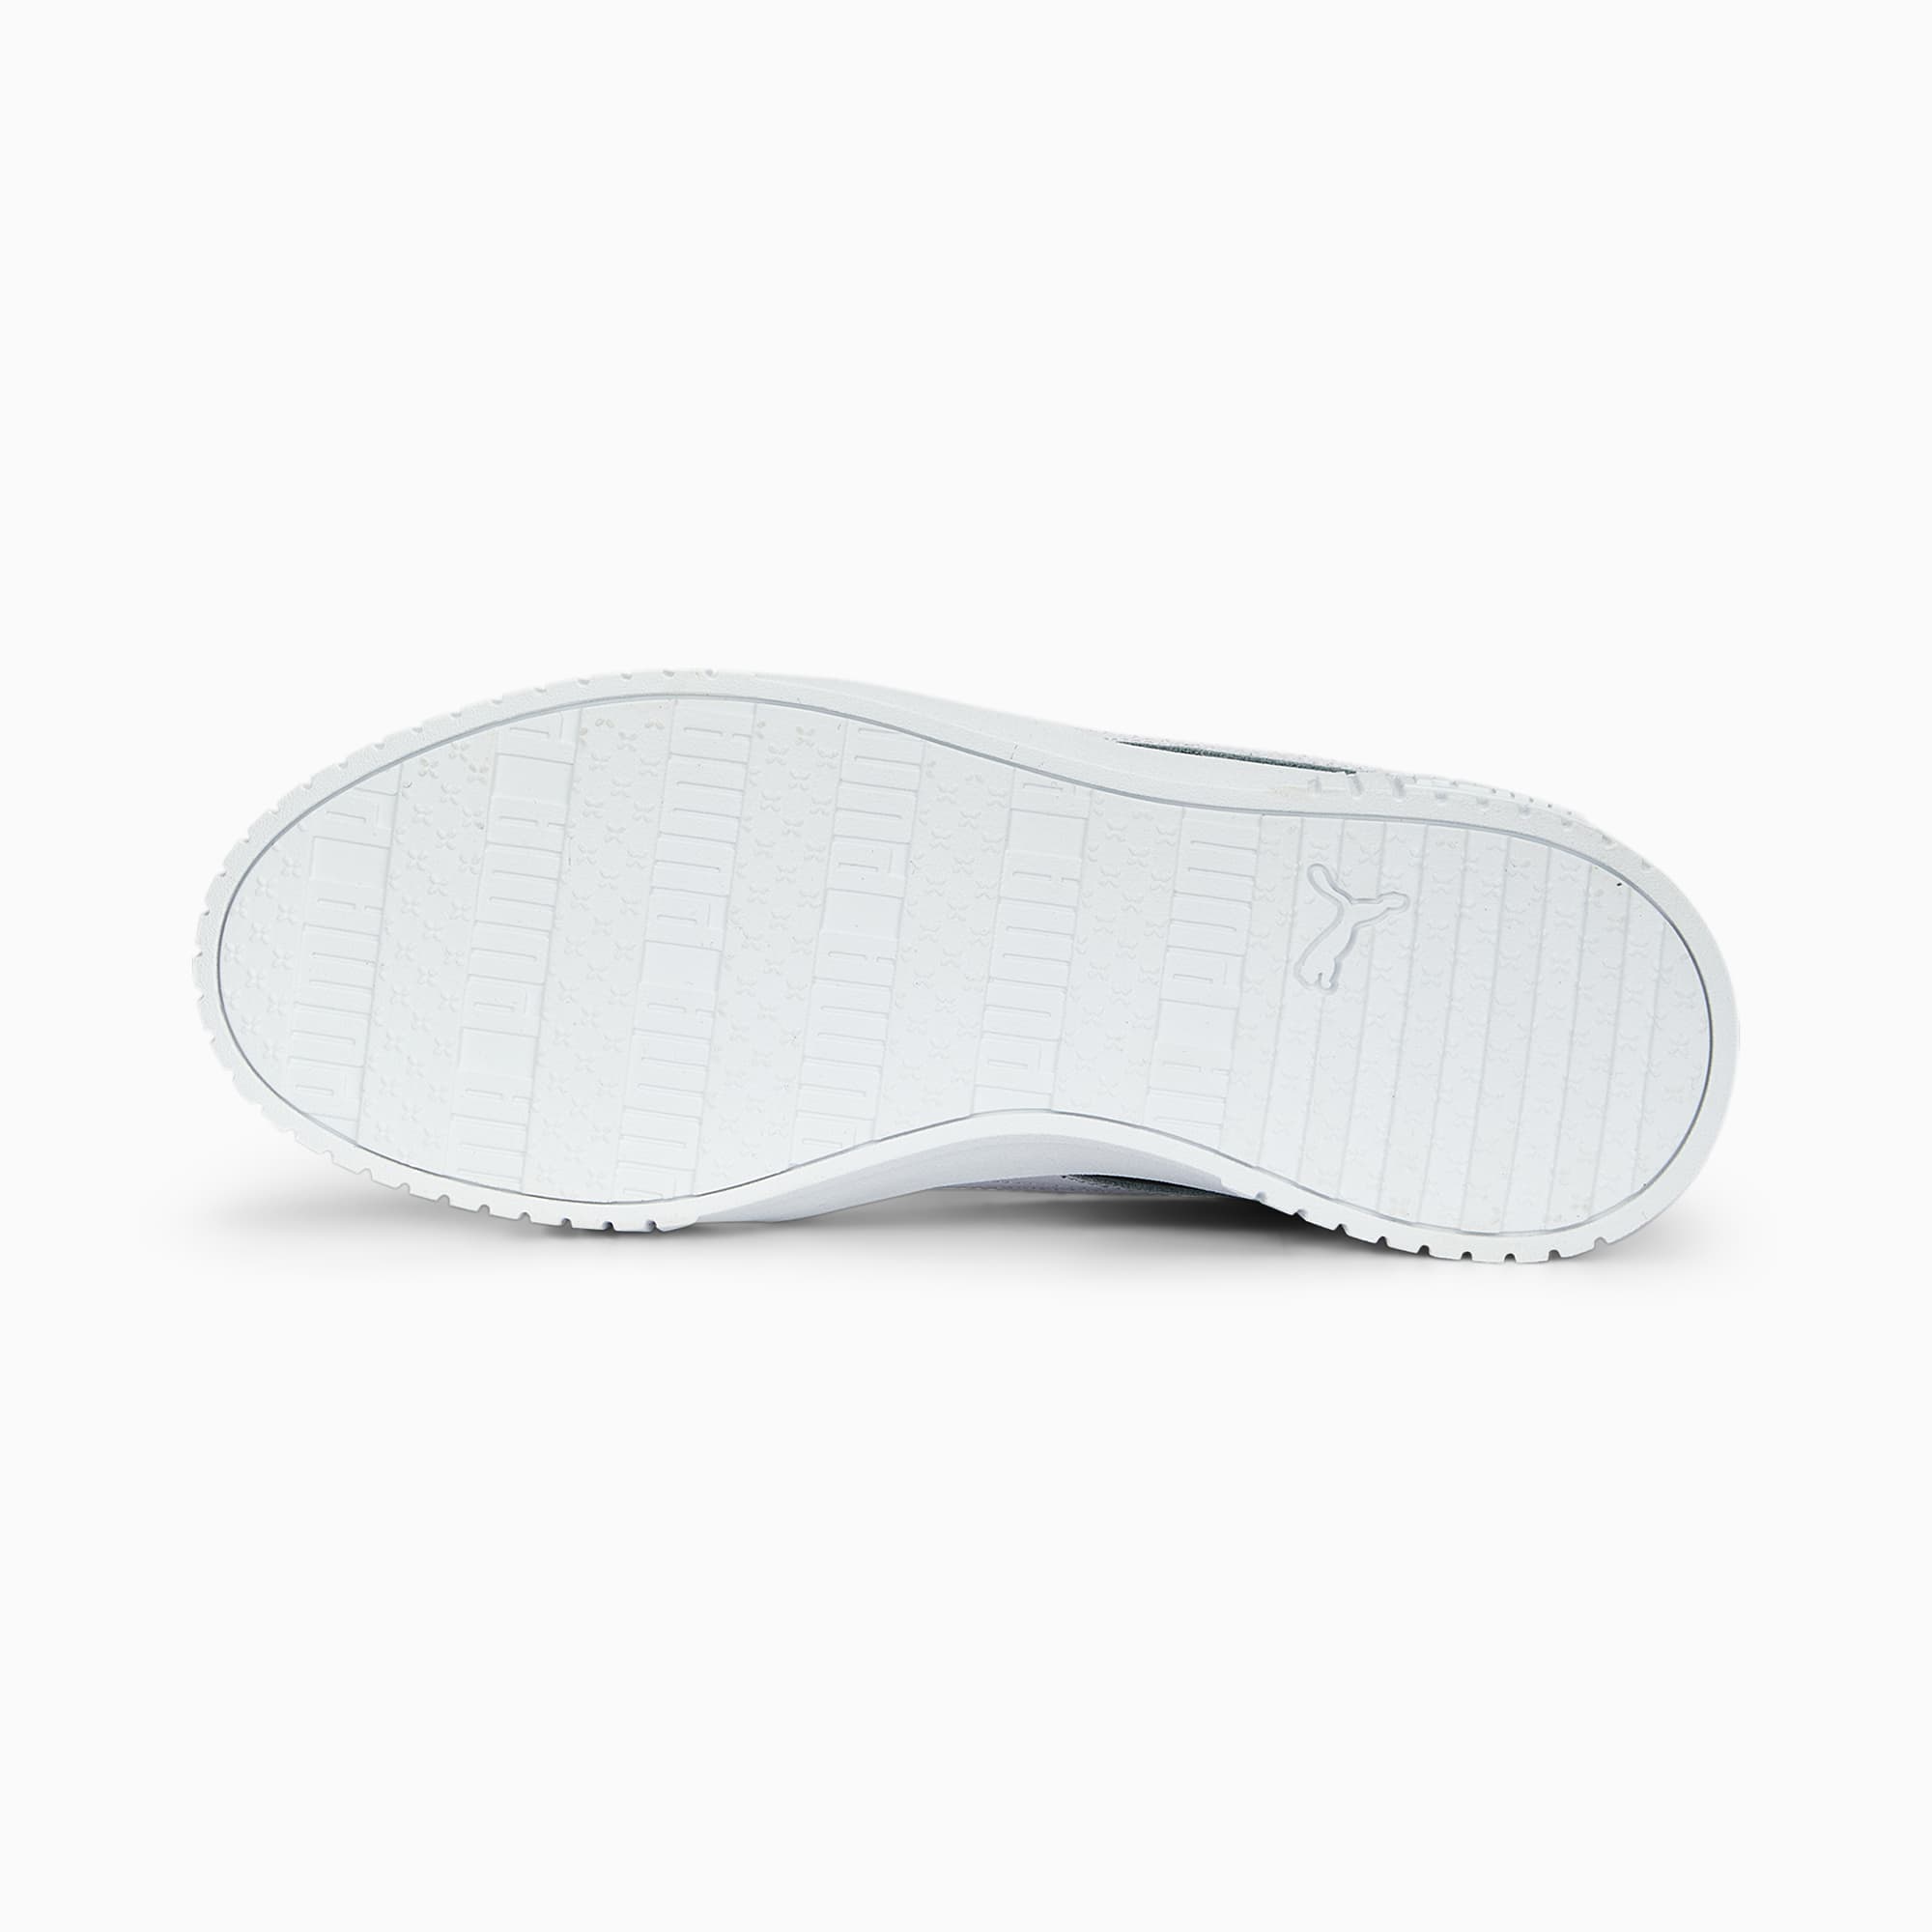 PUMA Chaussure Sneakers Carina 2.0 Femme, Noir/Blanc/Argent